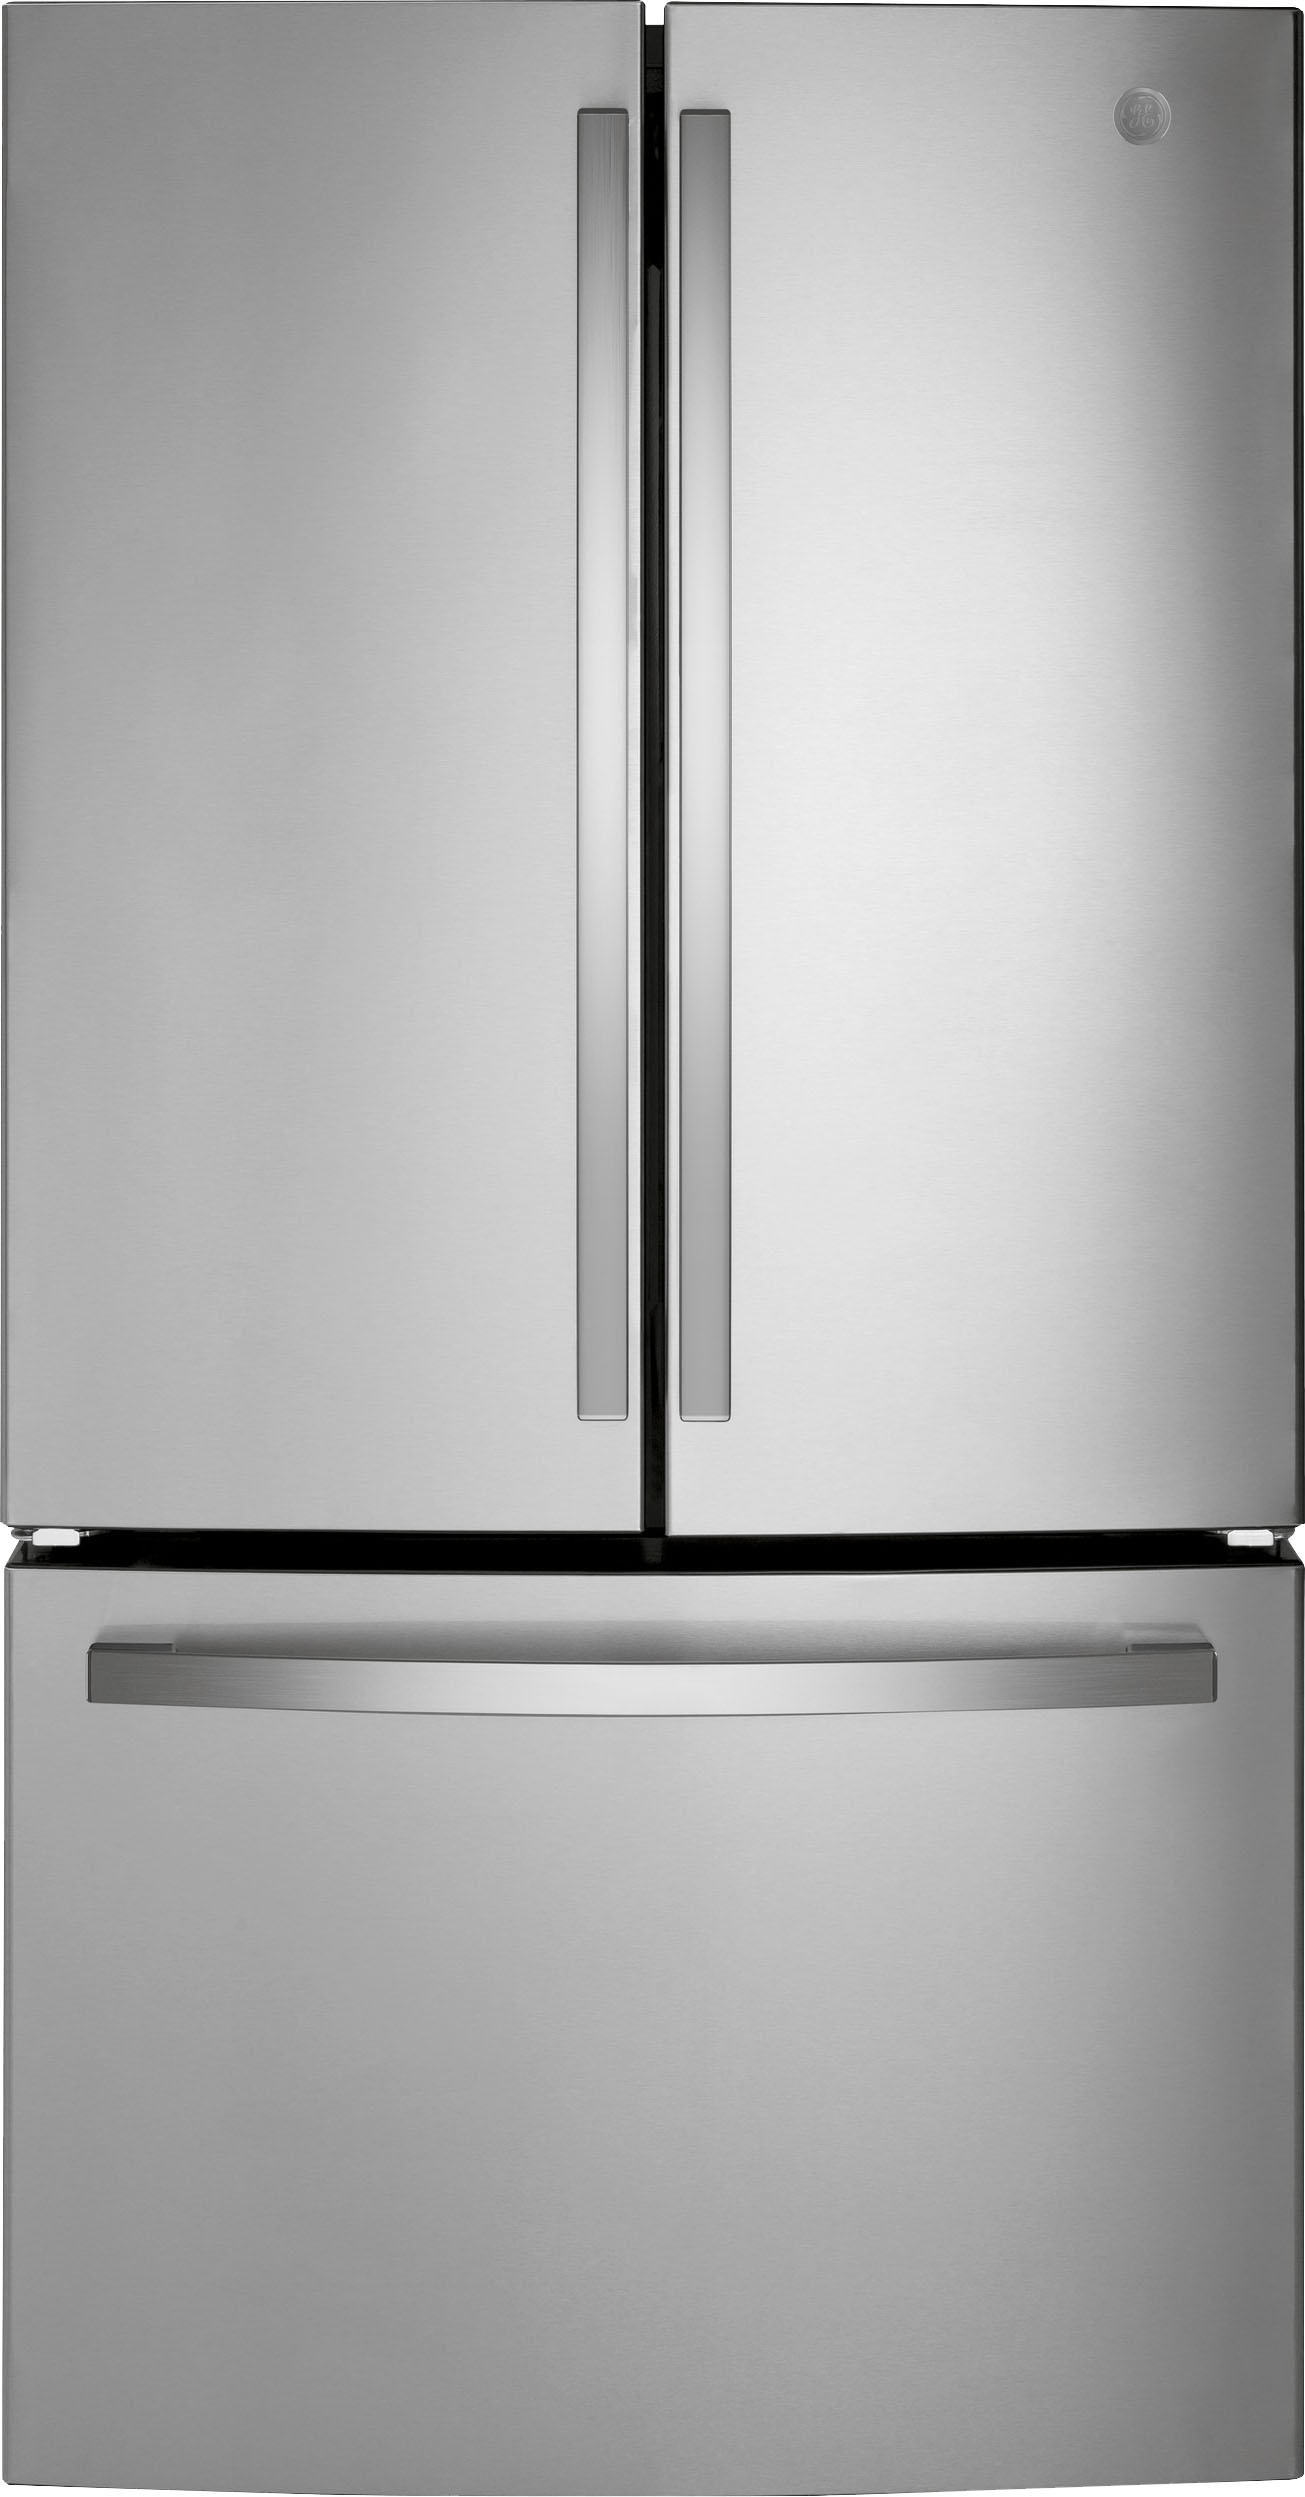 GE 27.0 cu. ft. French Door Refrigerator in Fingerprint Resistant Stainless Steel, ENERGY STAR GNE27JYMFS - $1598.00